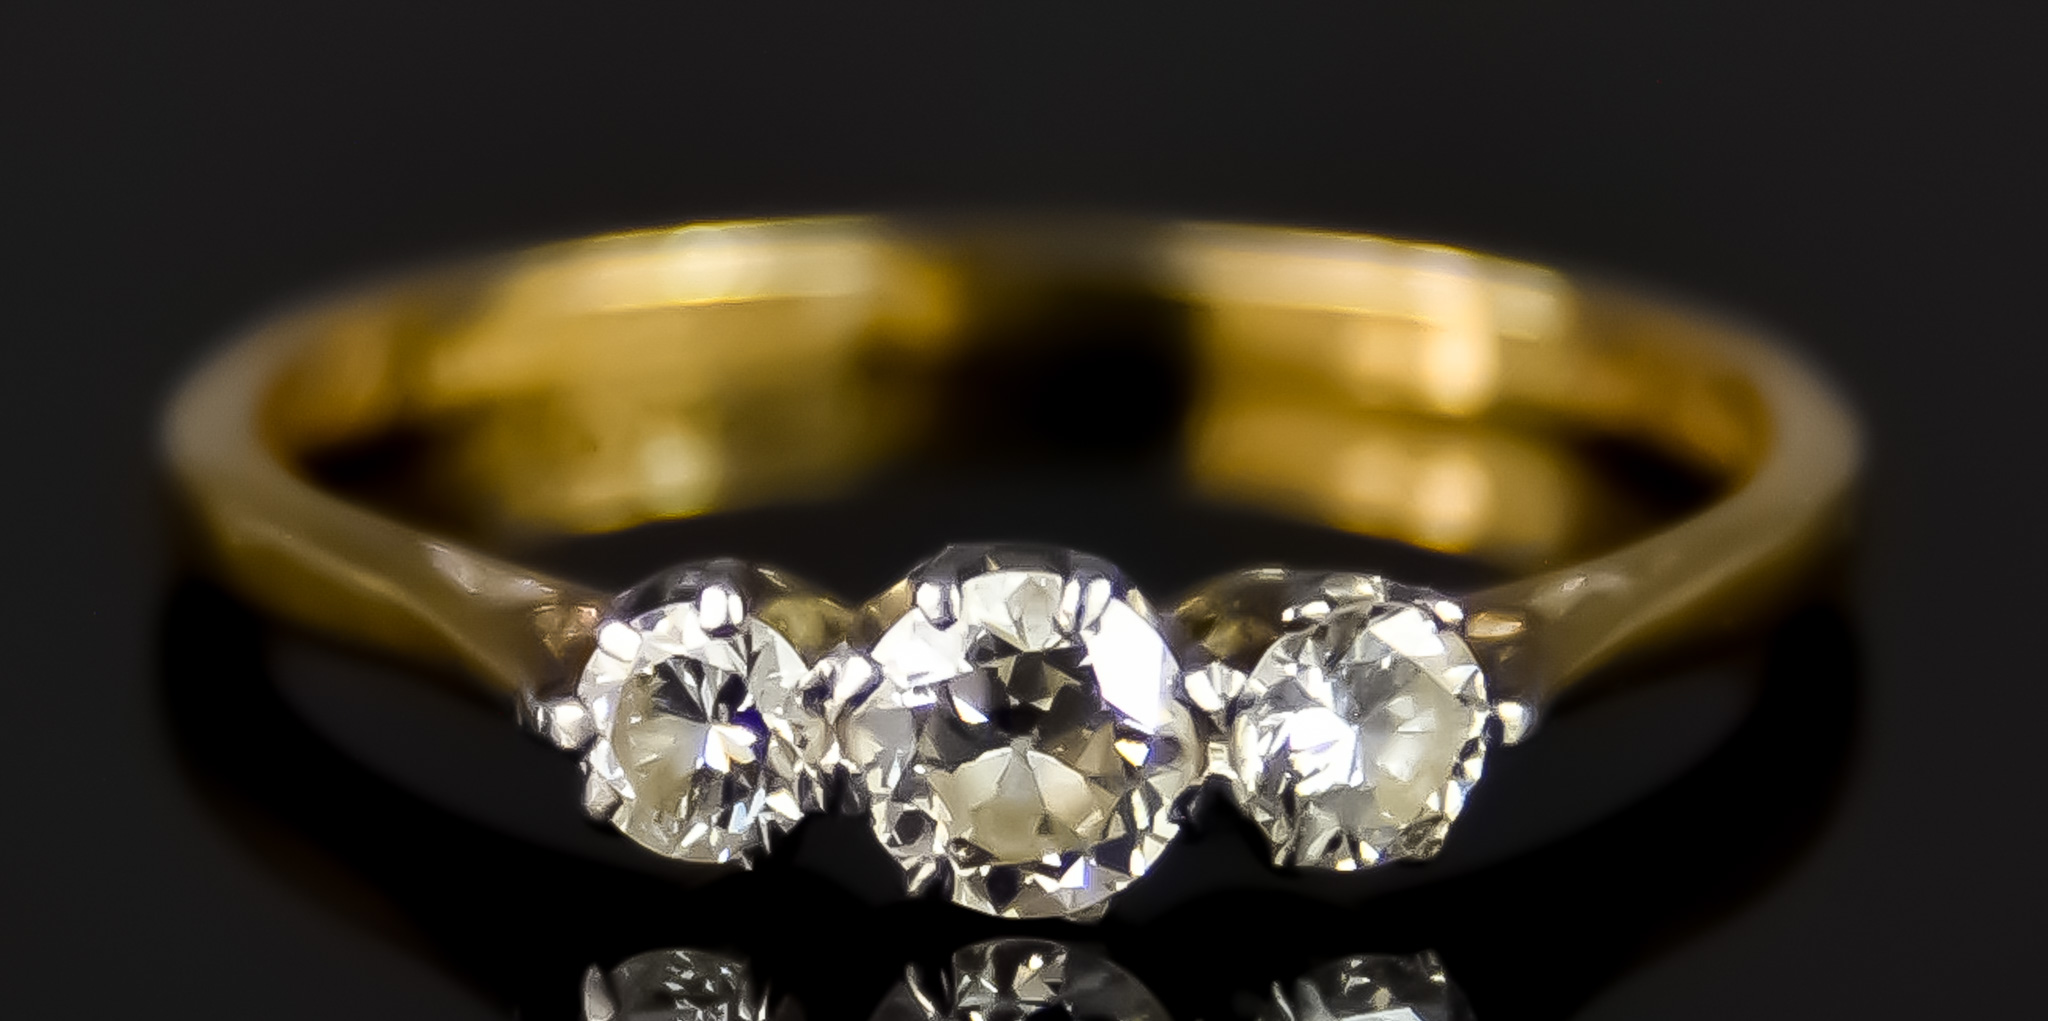 An 18ct Gold Three Stone Diamond Ring, 20th Century, set with three small brilliant cut white